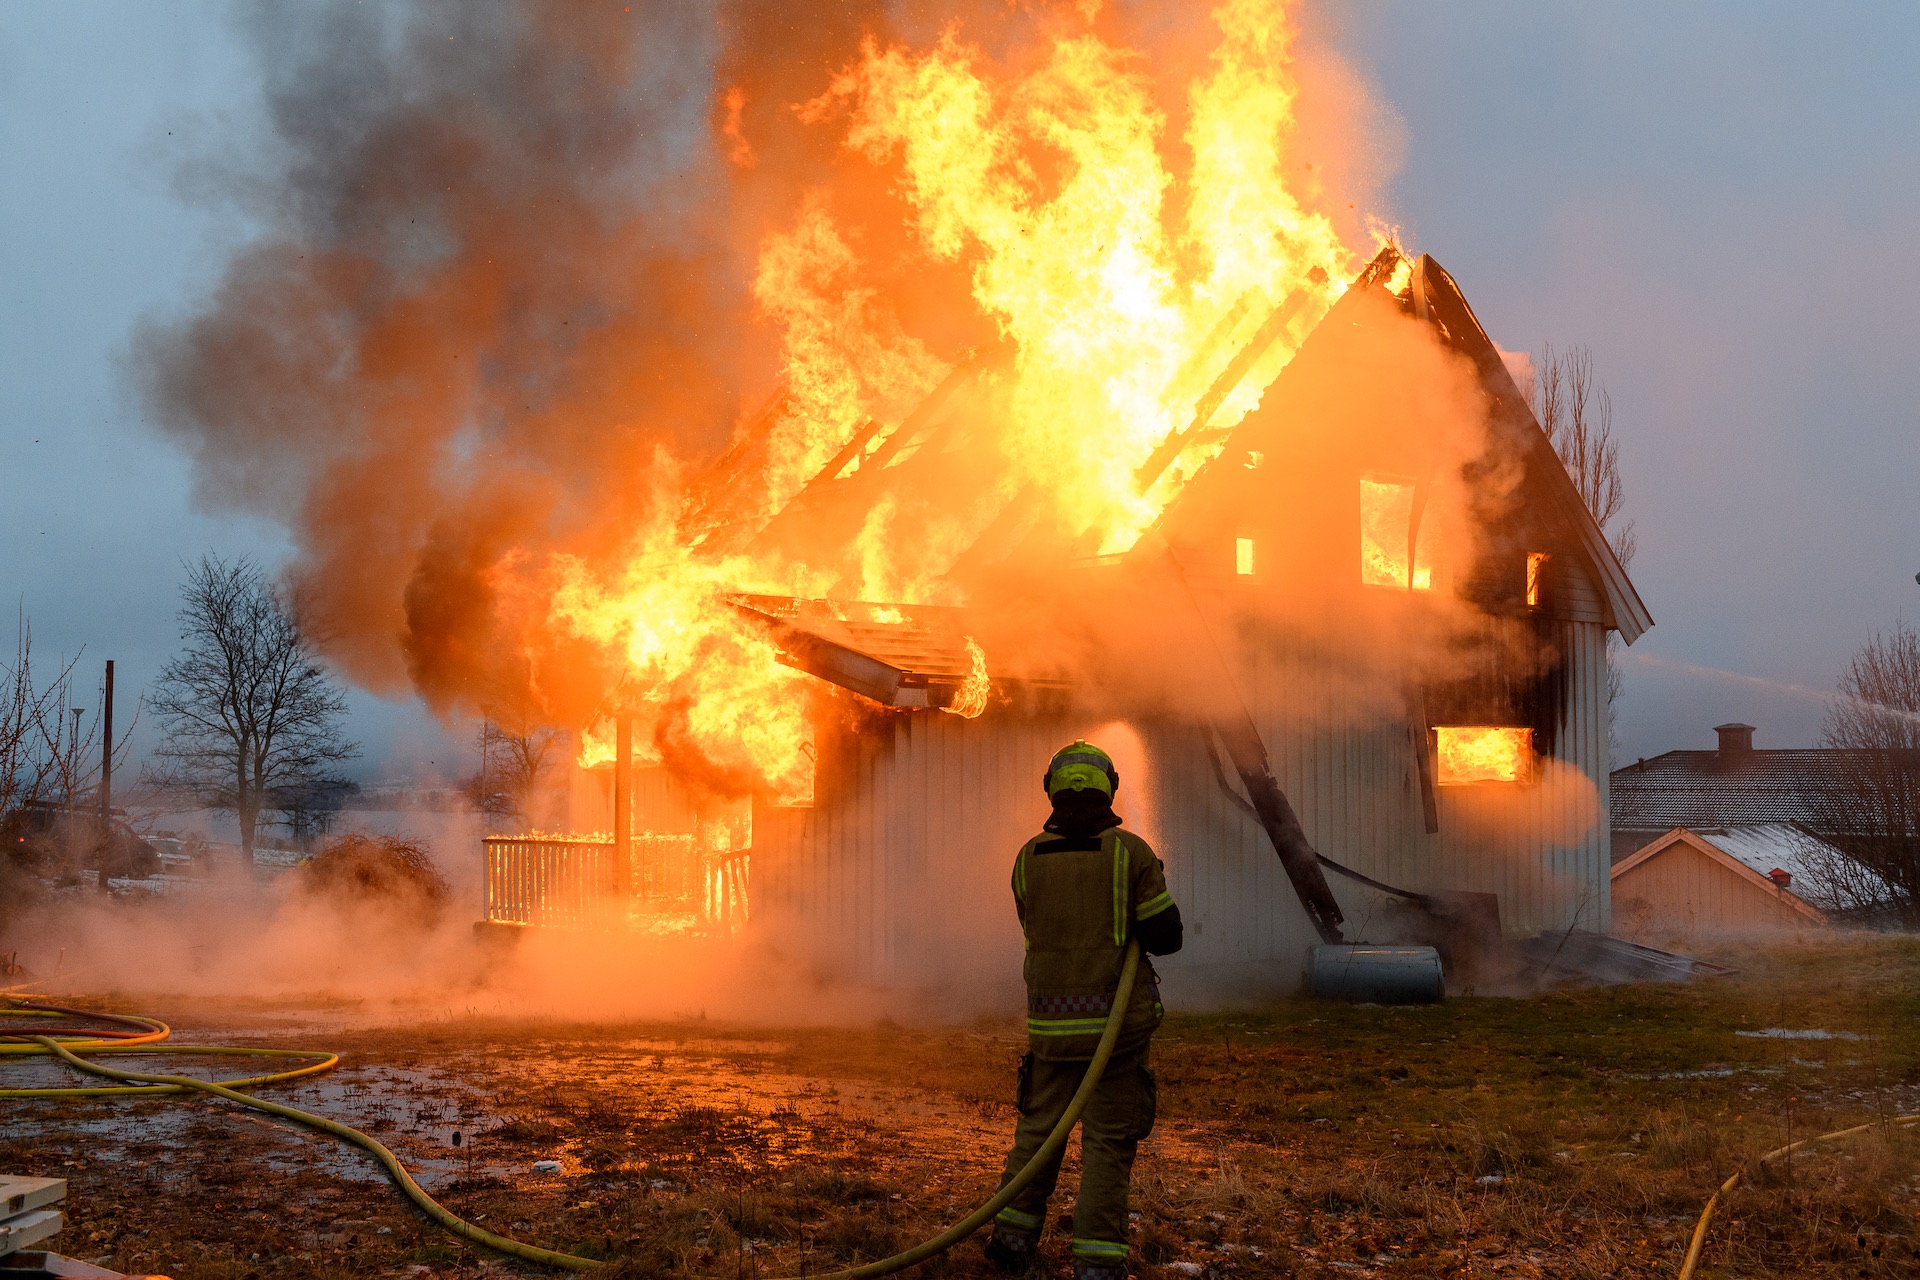 HOME FIRE EXPLOSION INJURES SAN ANTONIO MAN